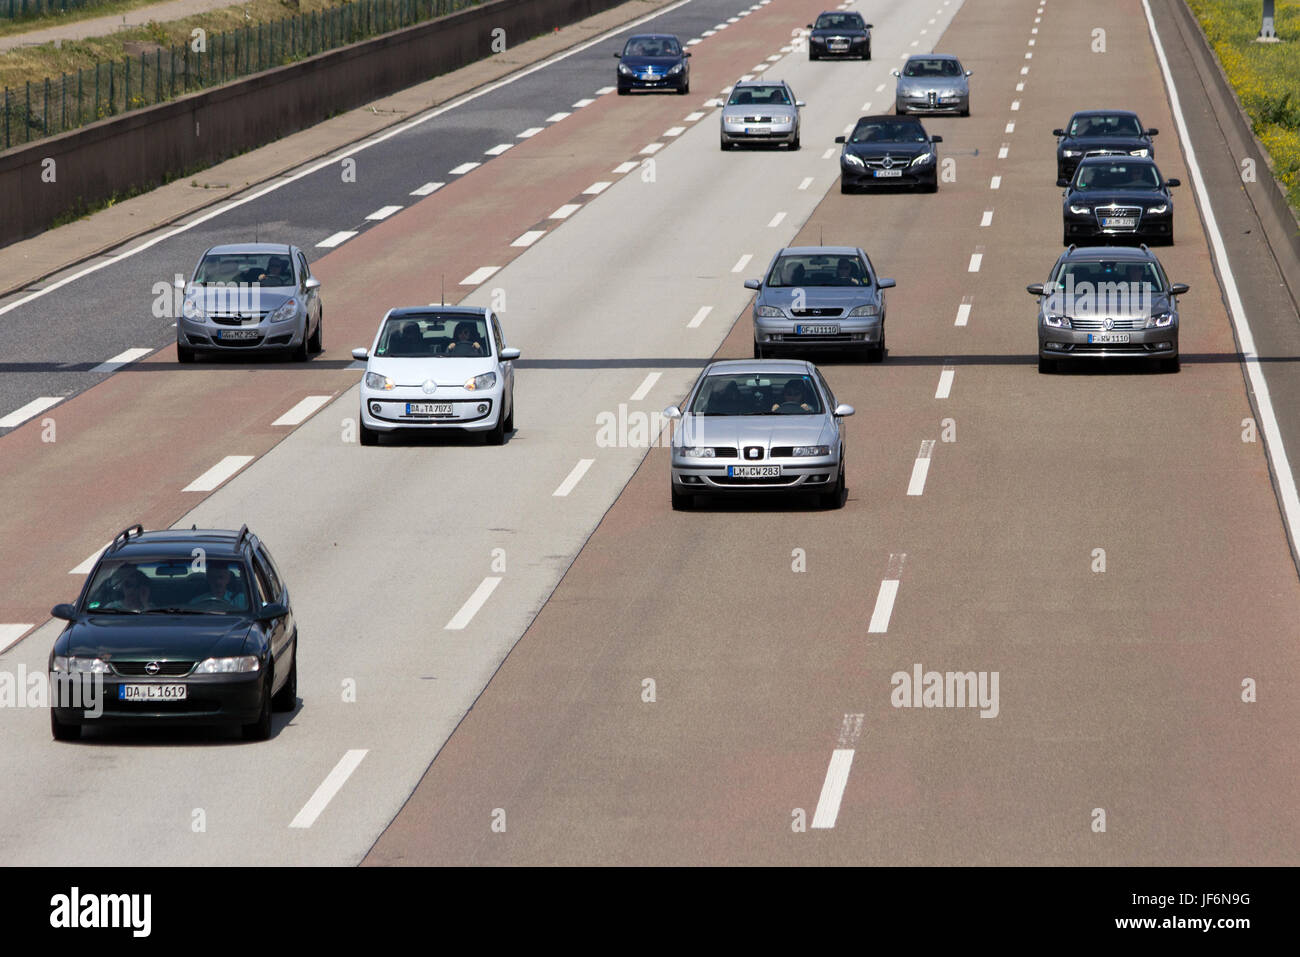 Francfort, Allemagne - 11 juillet : le trafic sur une autoroute allemande le 11 juillet 2013 à Francfort, Allemagne. Autoroutes allemandes n'ont pas de rang général speedlimit et Banque D'Images